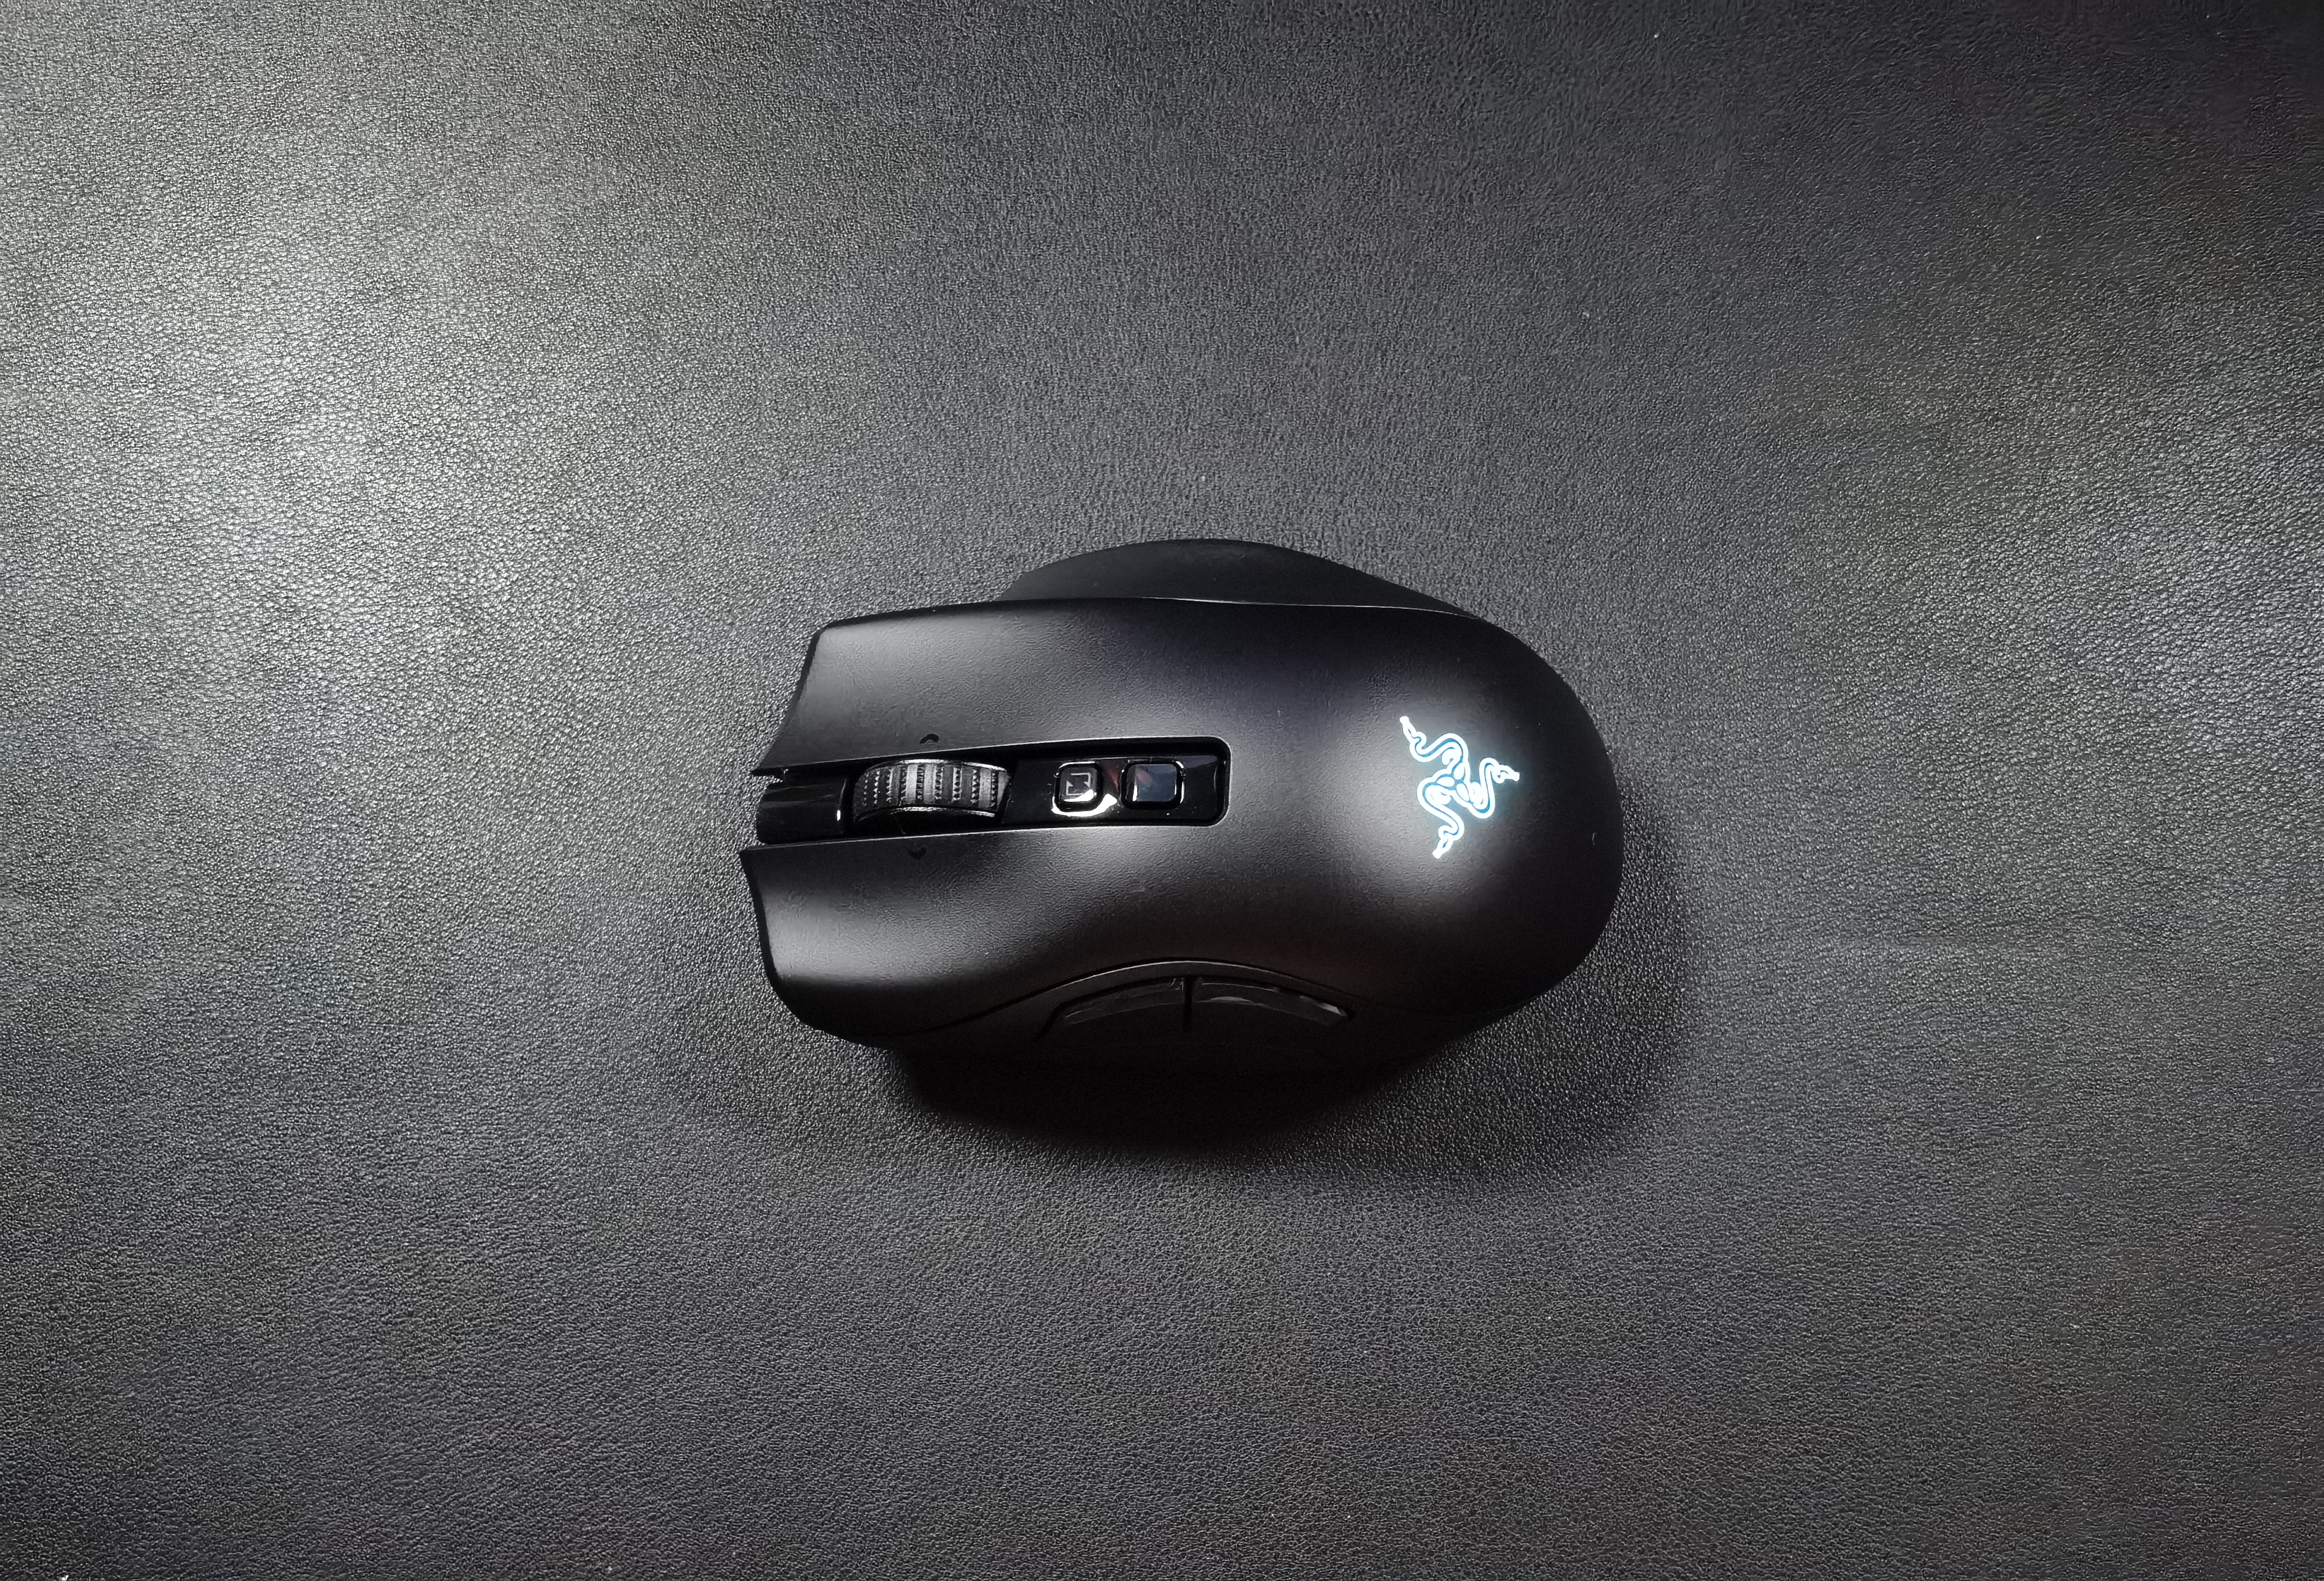 Geek Review: Razer Naga Pro Wireless Gaming Mouse